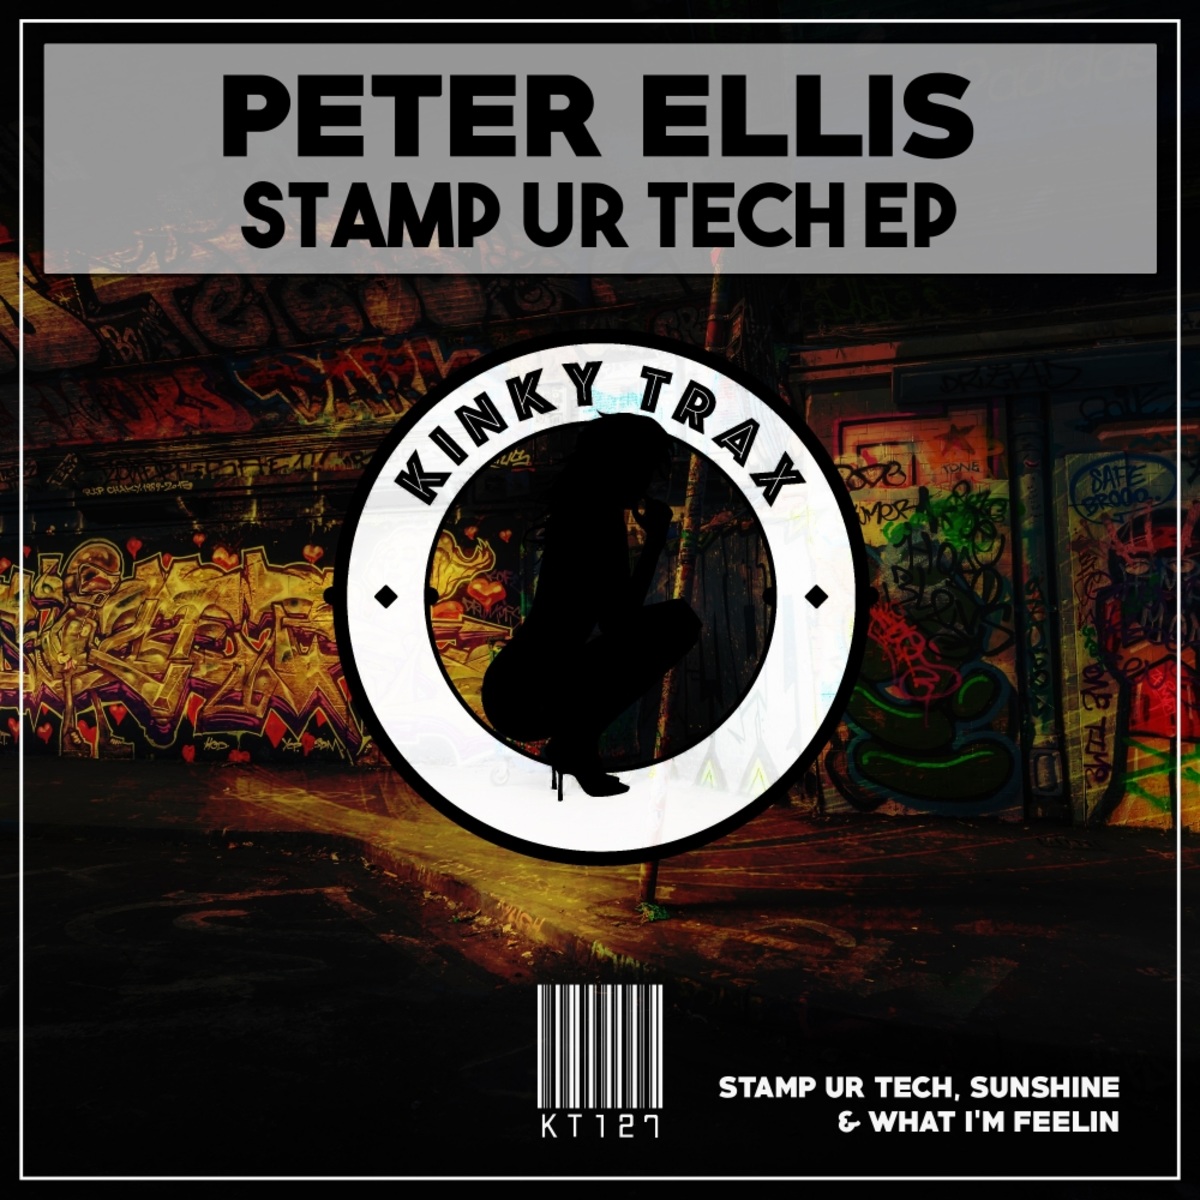 Peter Ellis - Stamp Ur Tech EP / Kinky Trax